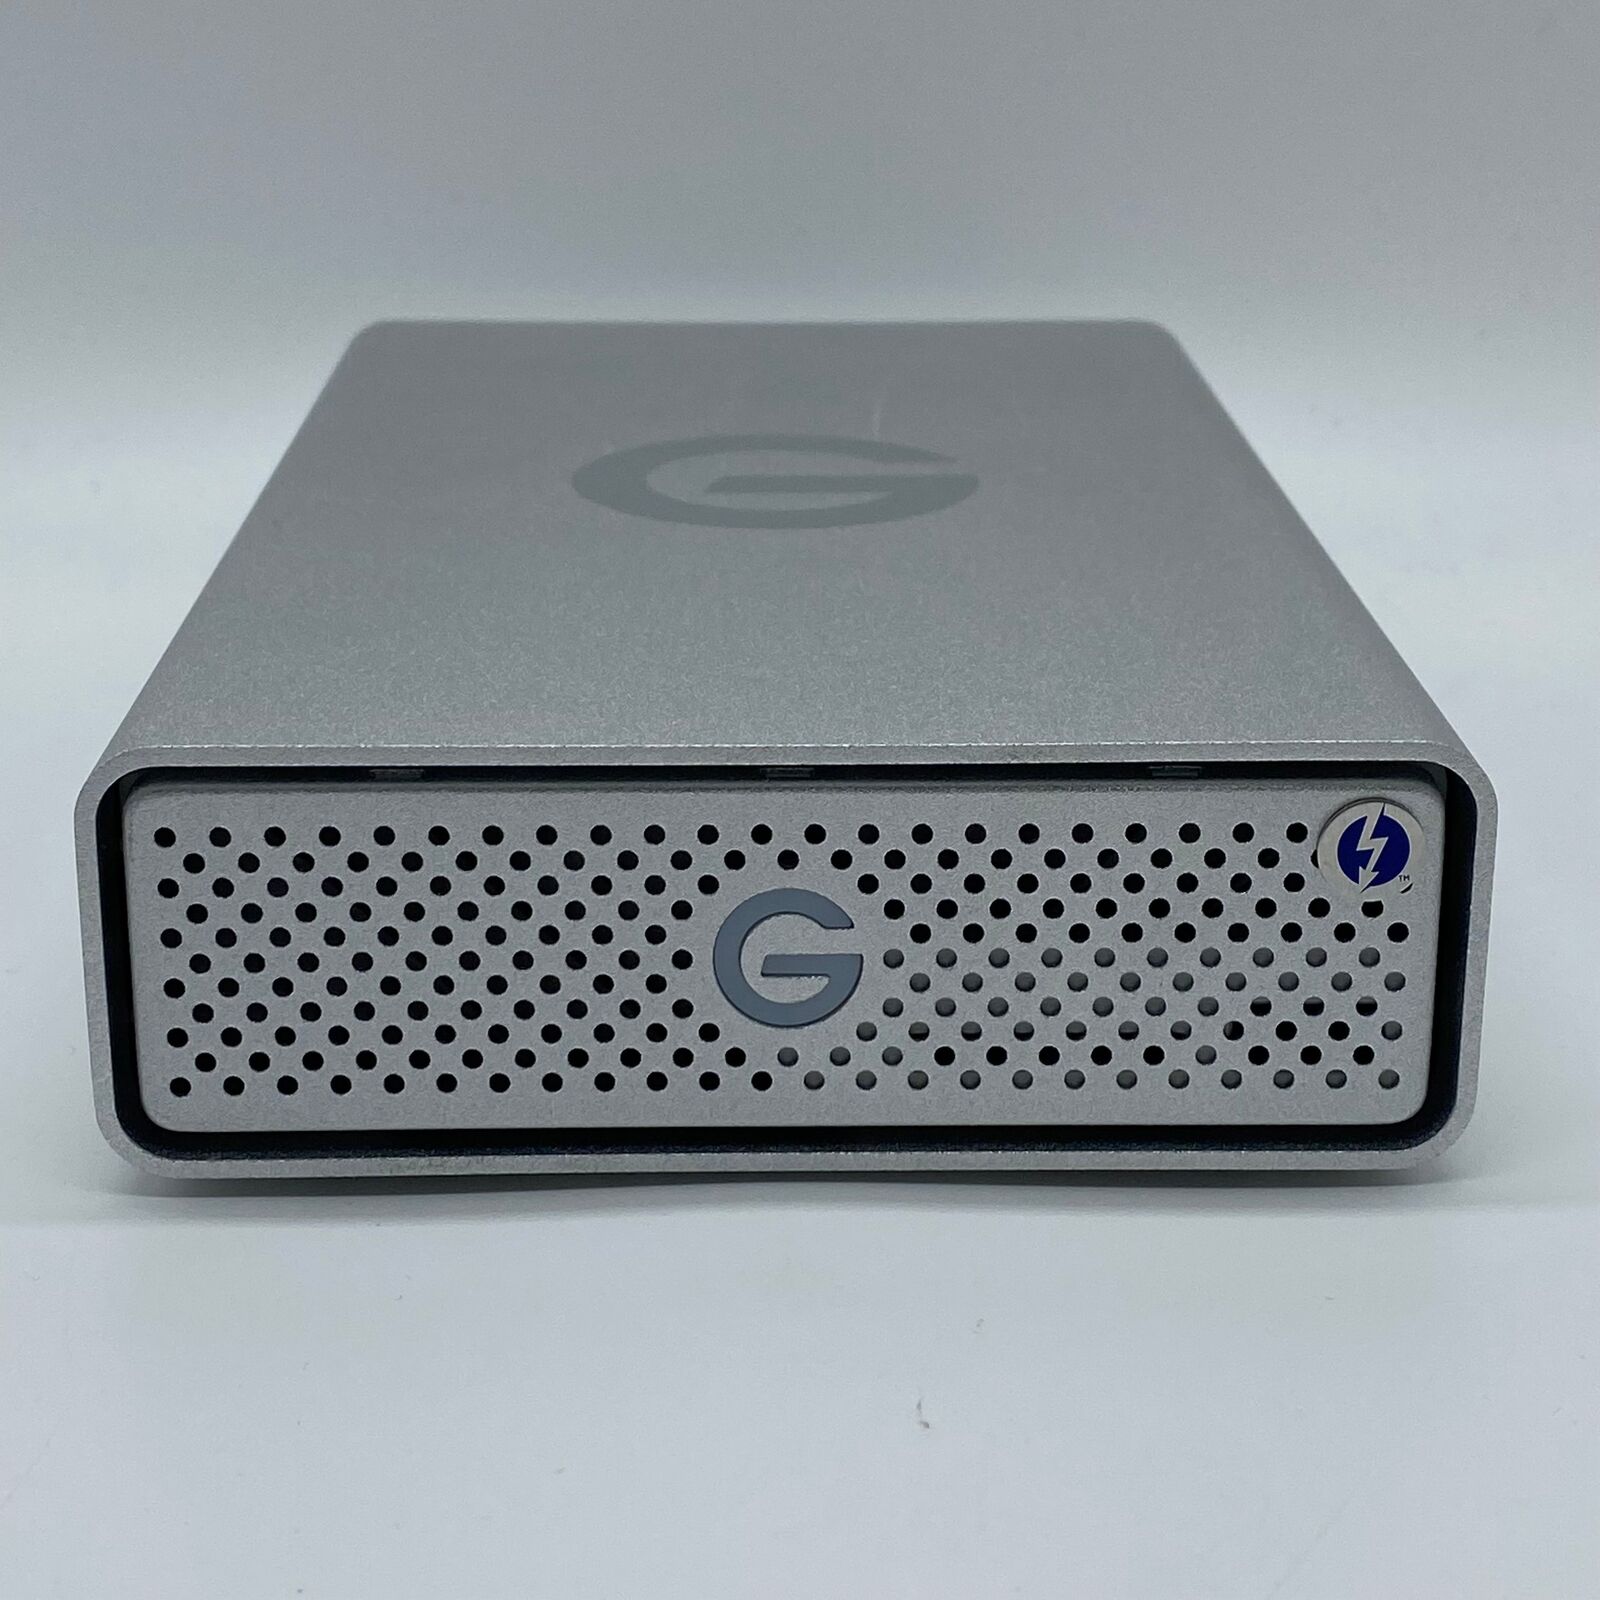 G-Technology G-Drive with Thunderbolt 3 8TB External HDD 0G05373